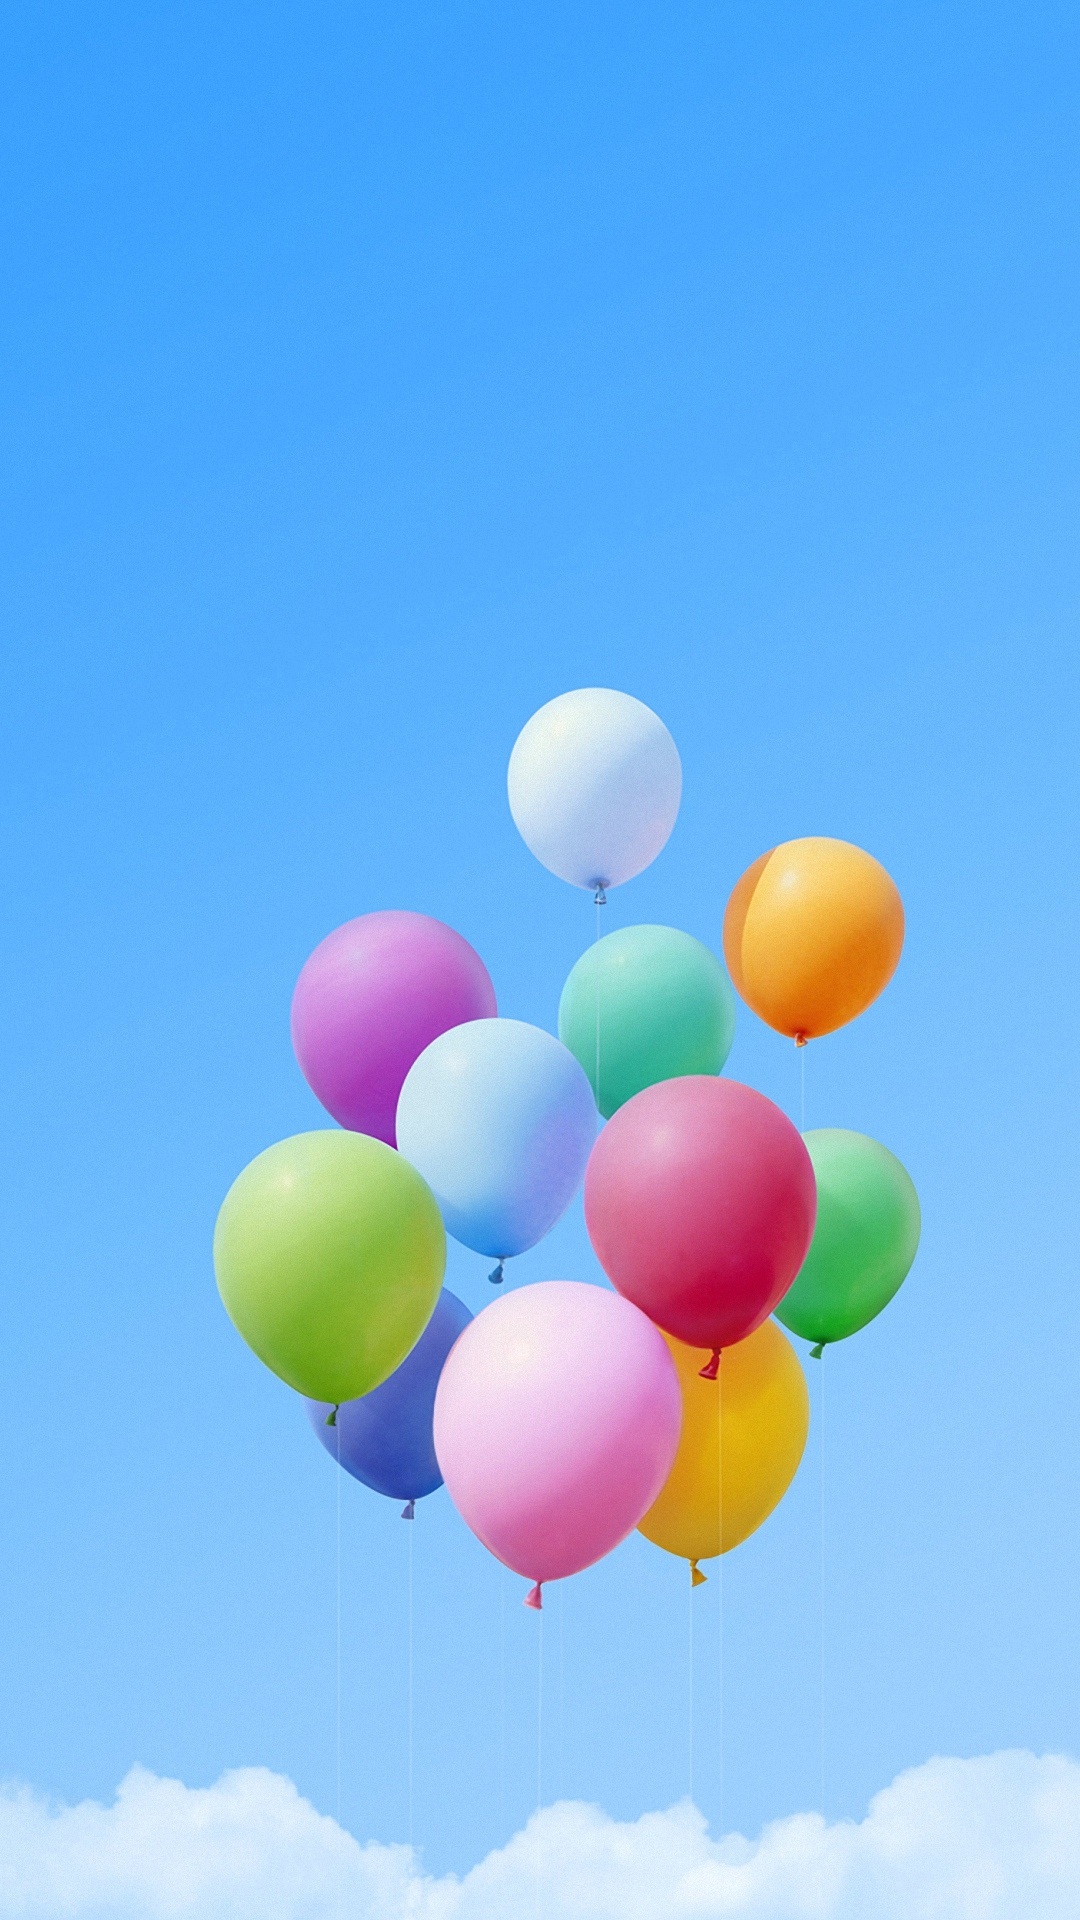 cute photos for wallpaper,balloon,blue,sky,party supply,daytime